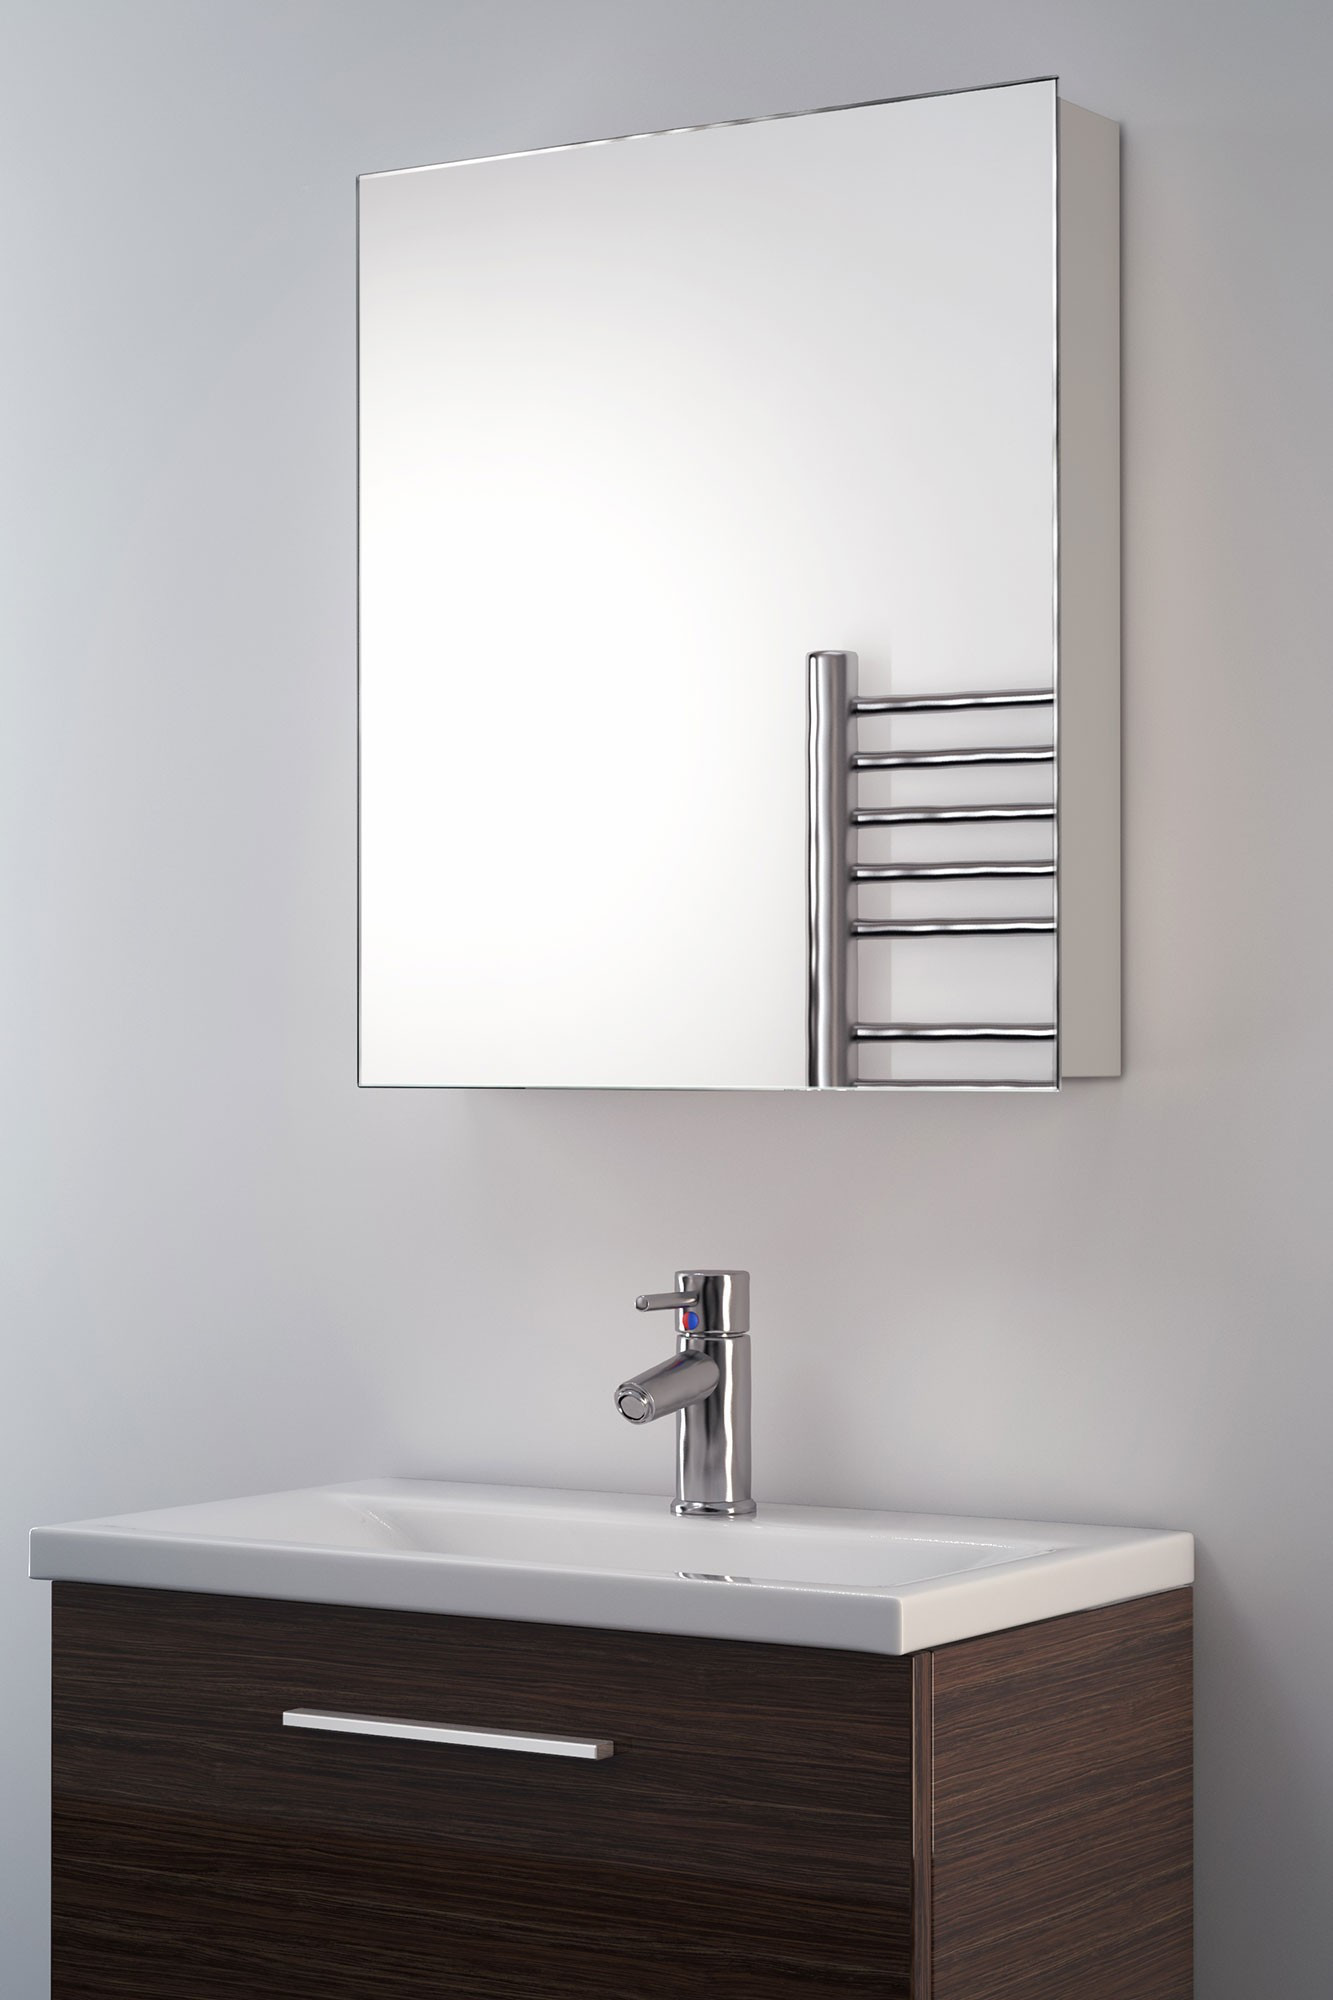 Mirrored Bathroom Cabinet
 Iris mirrored bathroom cabinet H 700mm x W 600mm x D